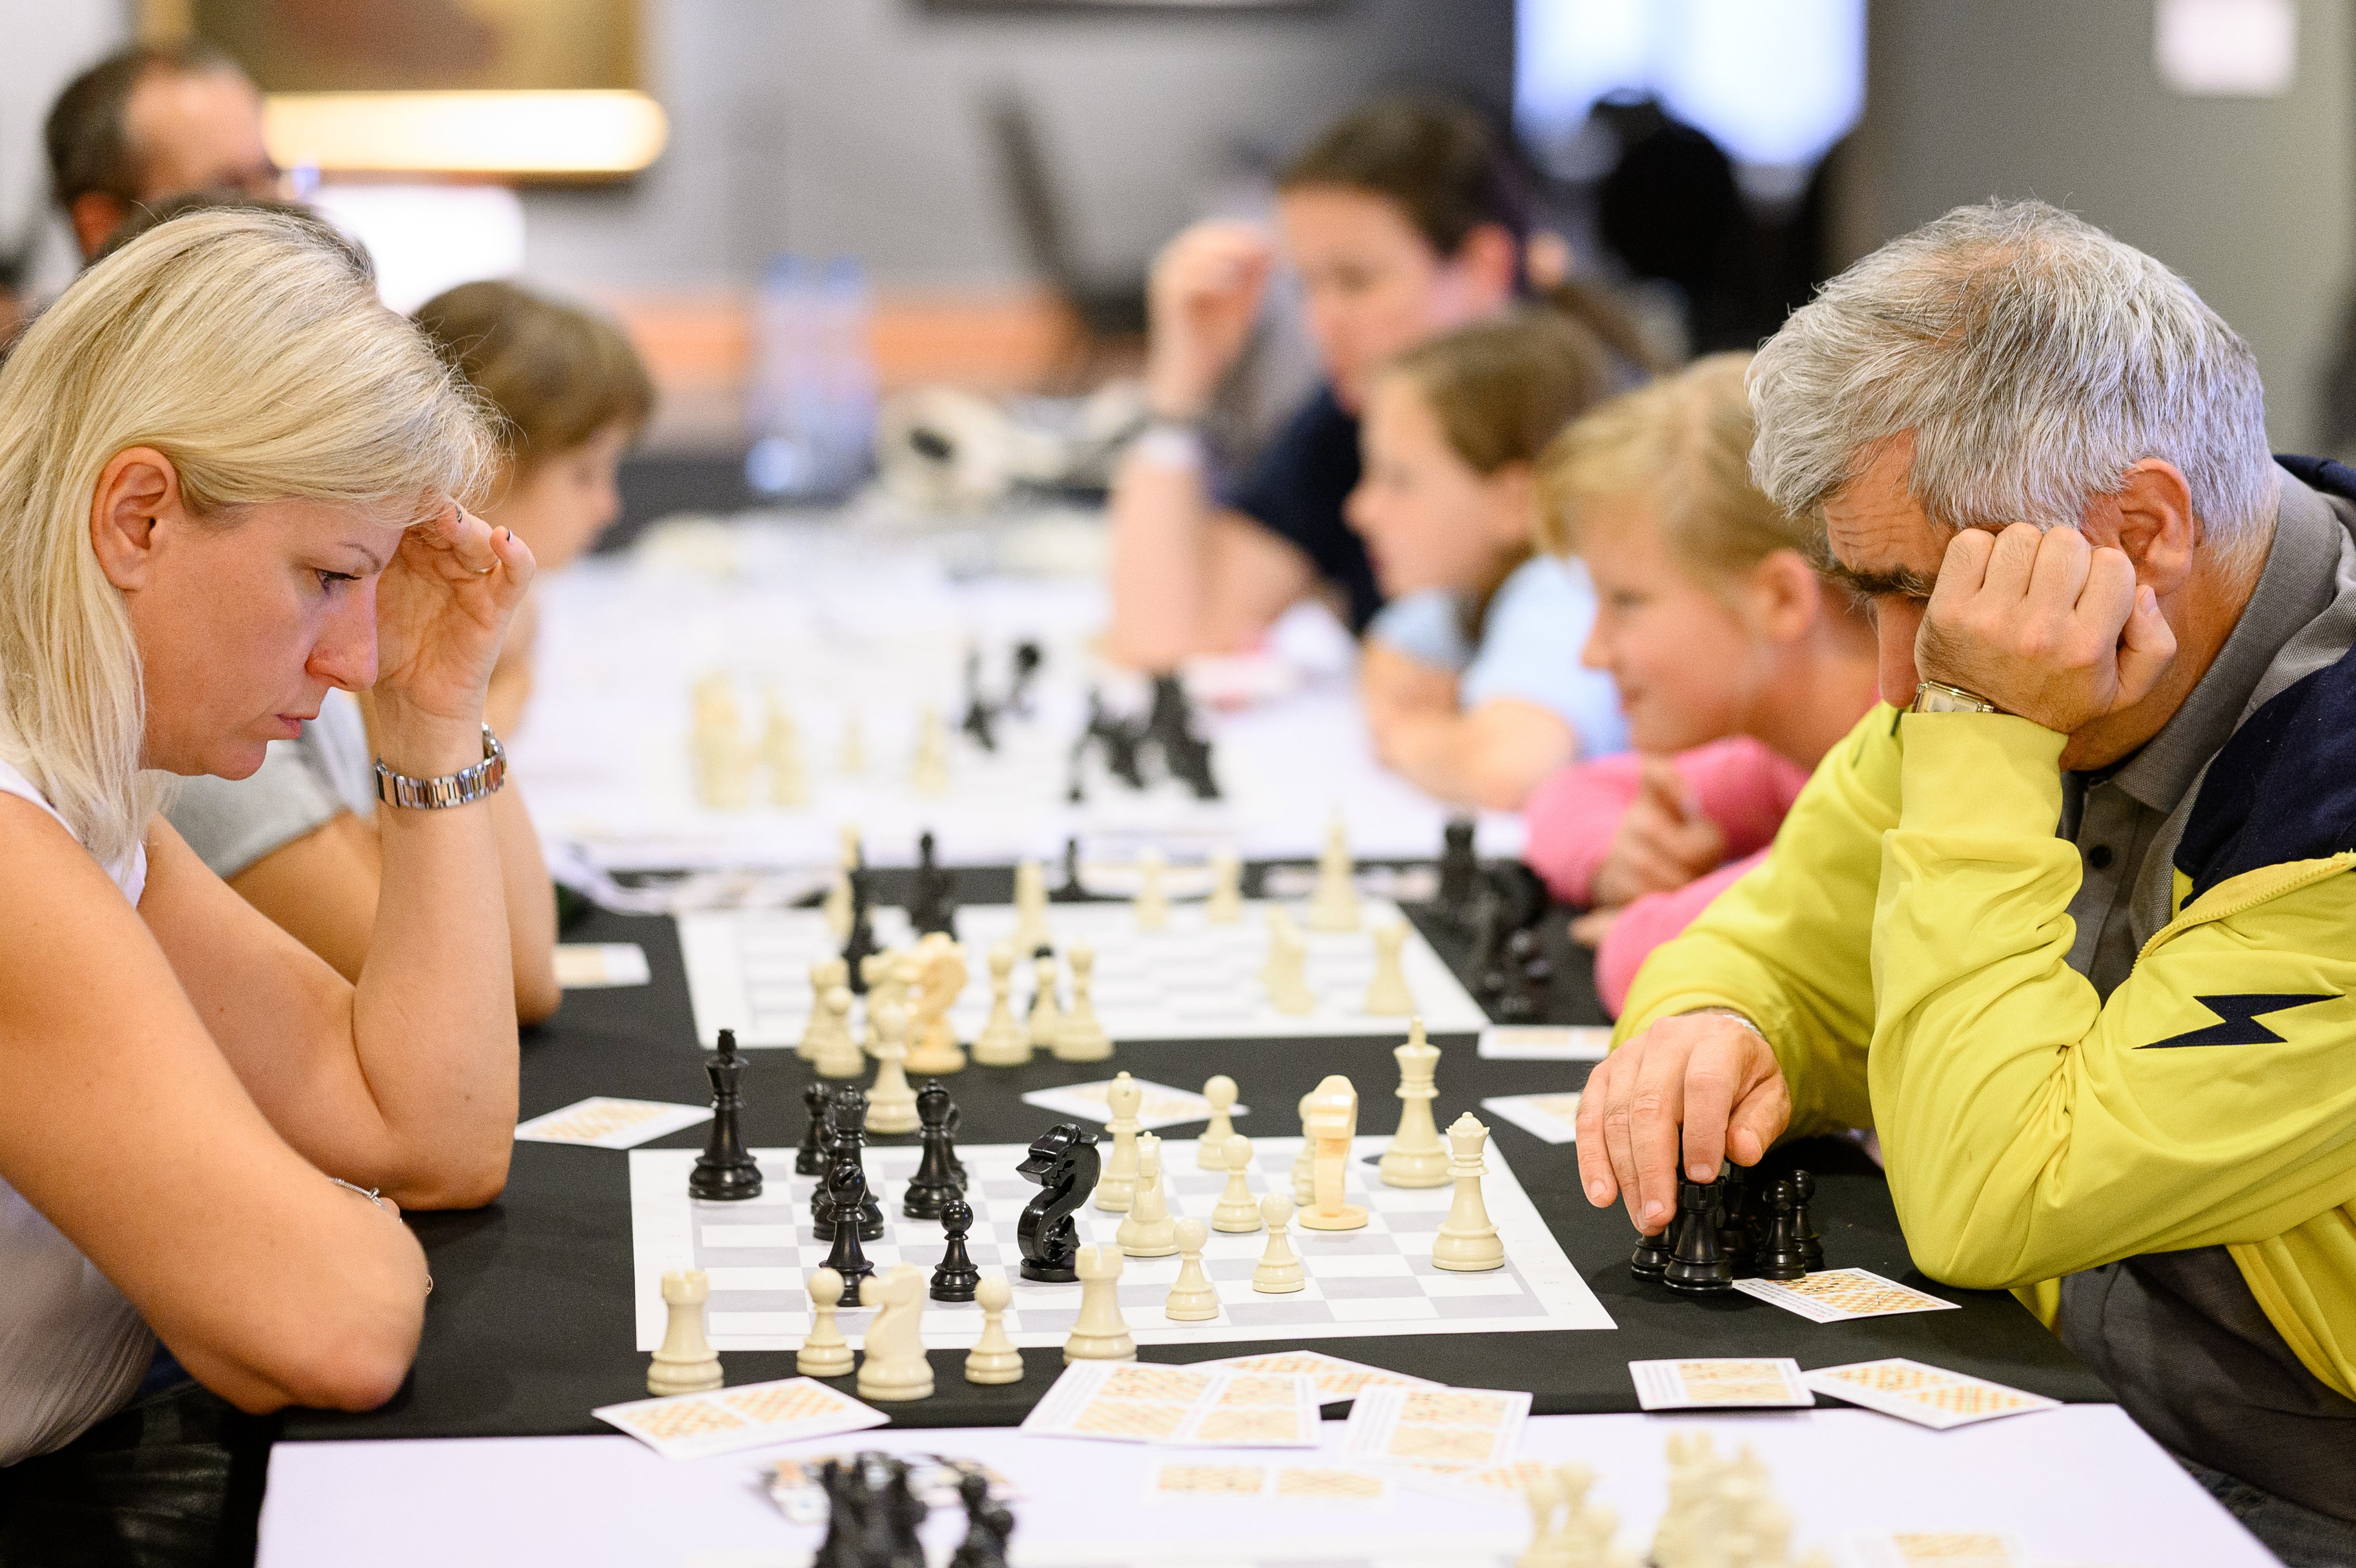 Judit Polgár, an International Chess Federation ICON - Diplomacy & Trade